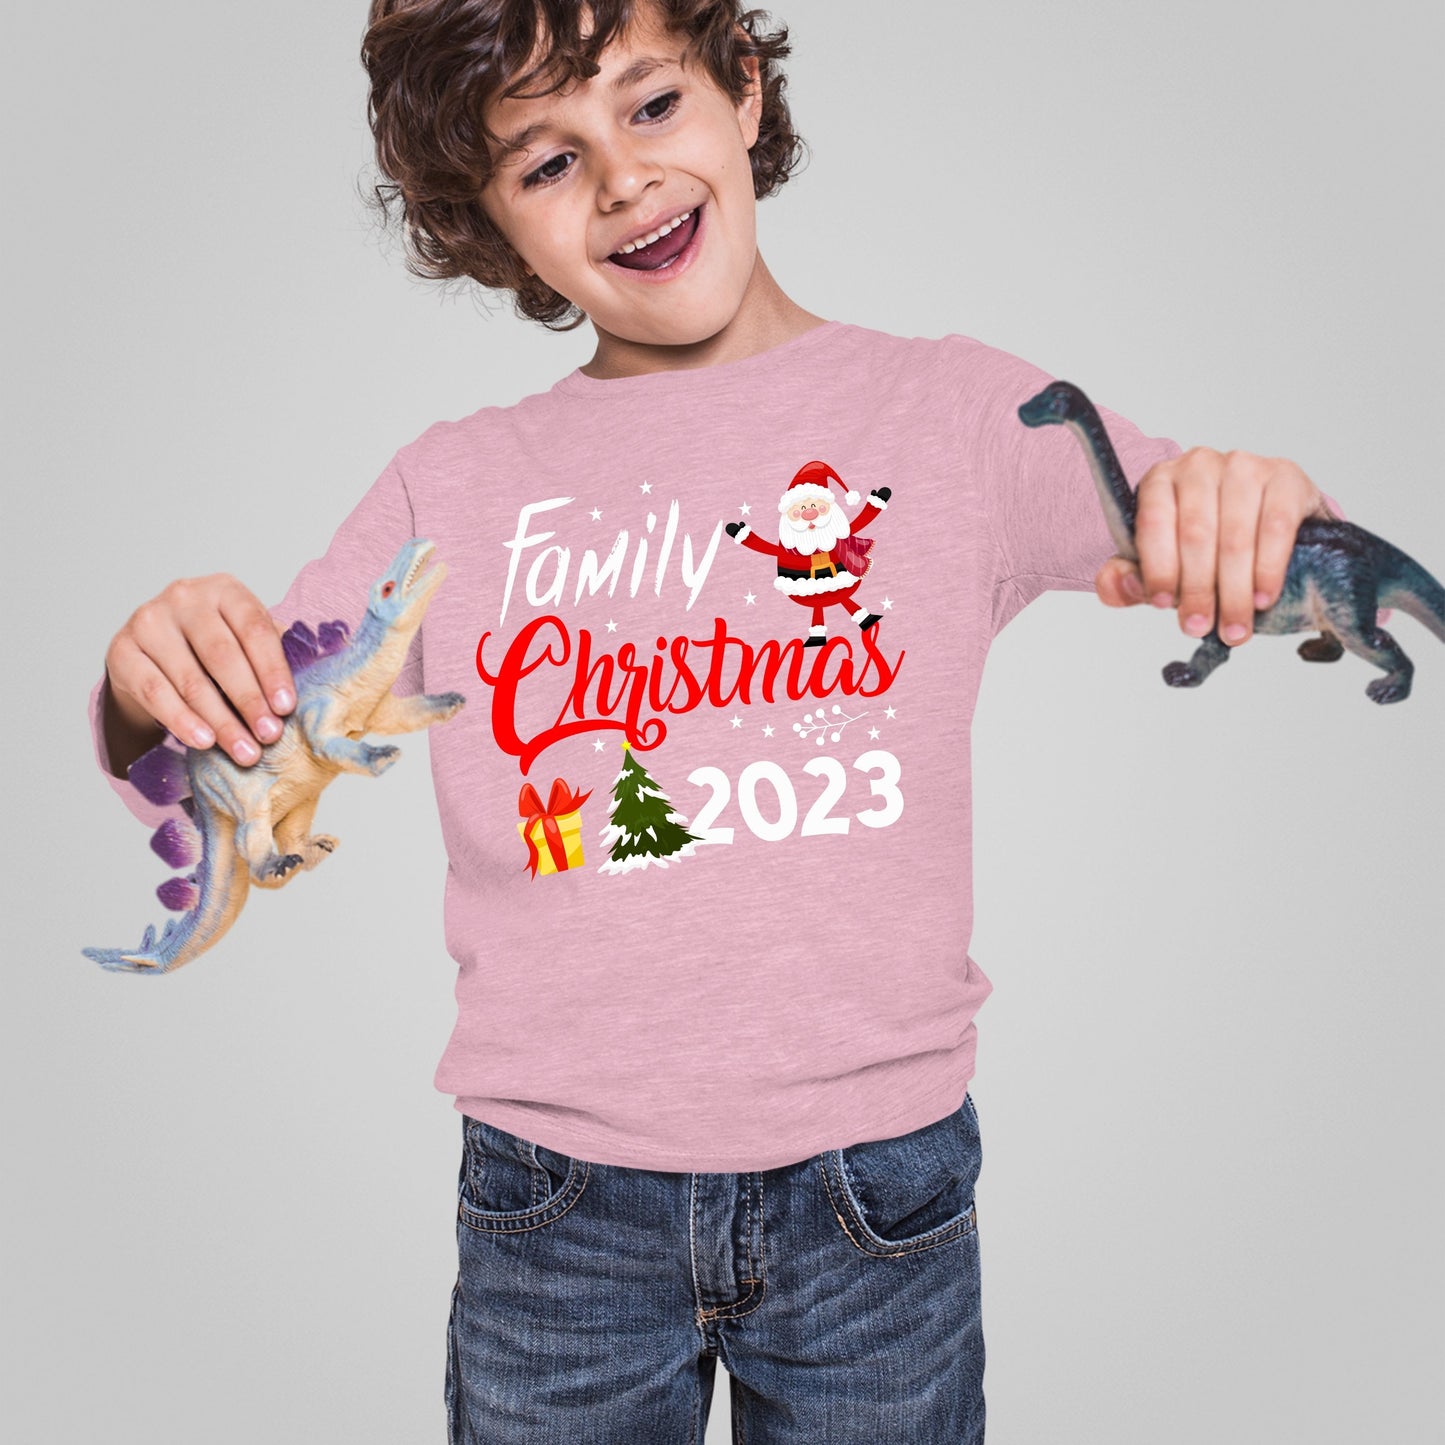 Family Christmas 2023, Toddler Long Sleeves, Christmas, Christmas Shirts, Christmas Clothing, Christmas Decor, Christmas Sweatshirts